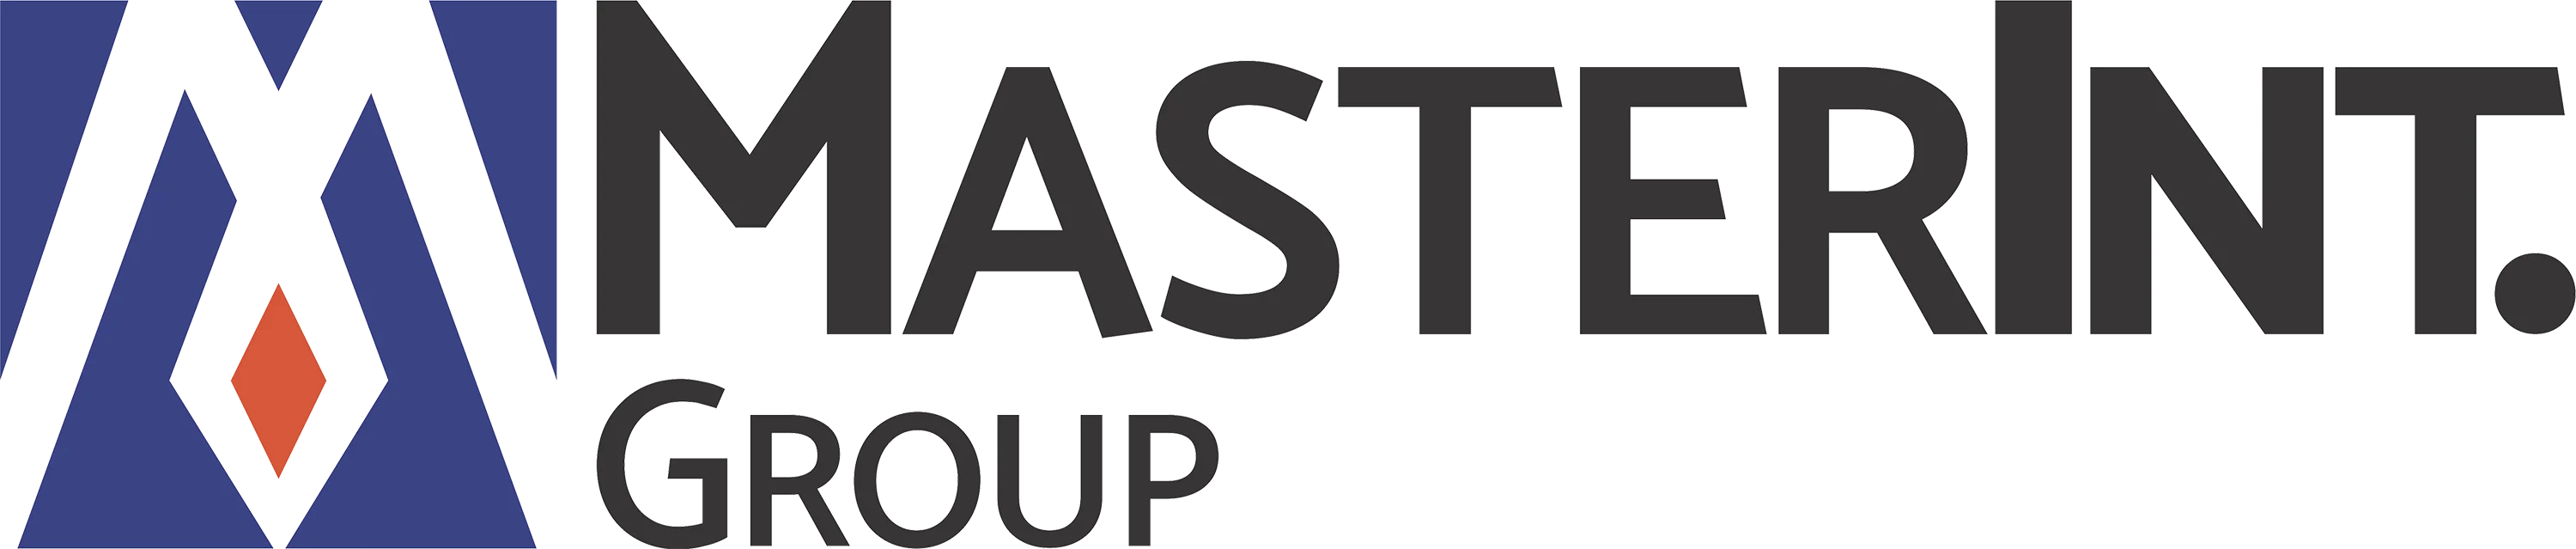 MasterInt Group Logo.png